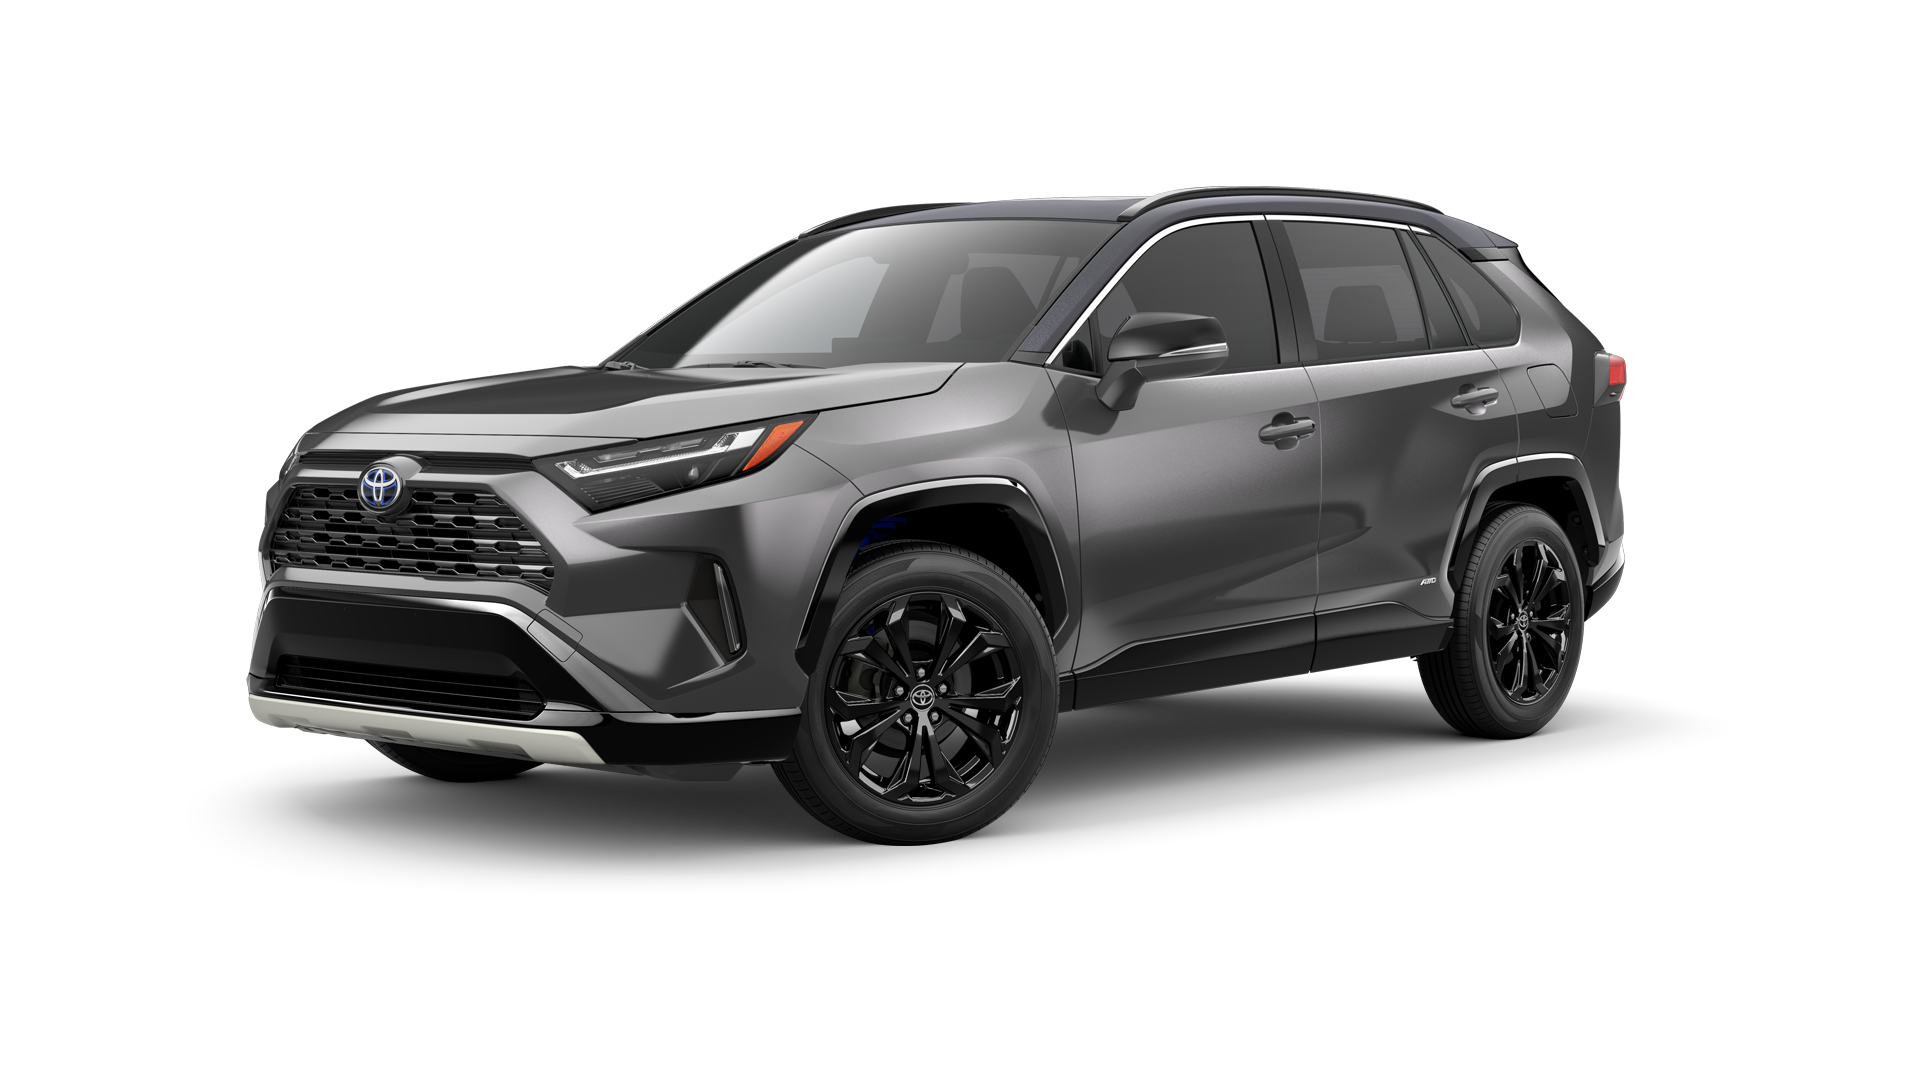 2023 Toyota Hybrid in Magnetic Gray Metallic/Midnight Black Metallic Roof.